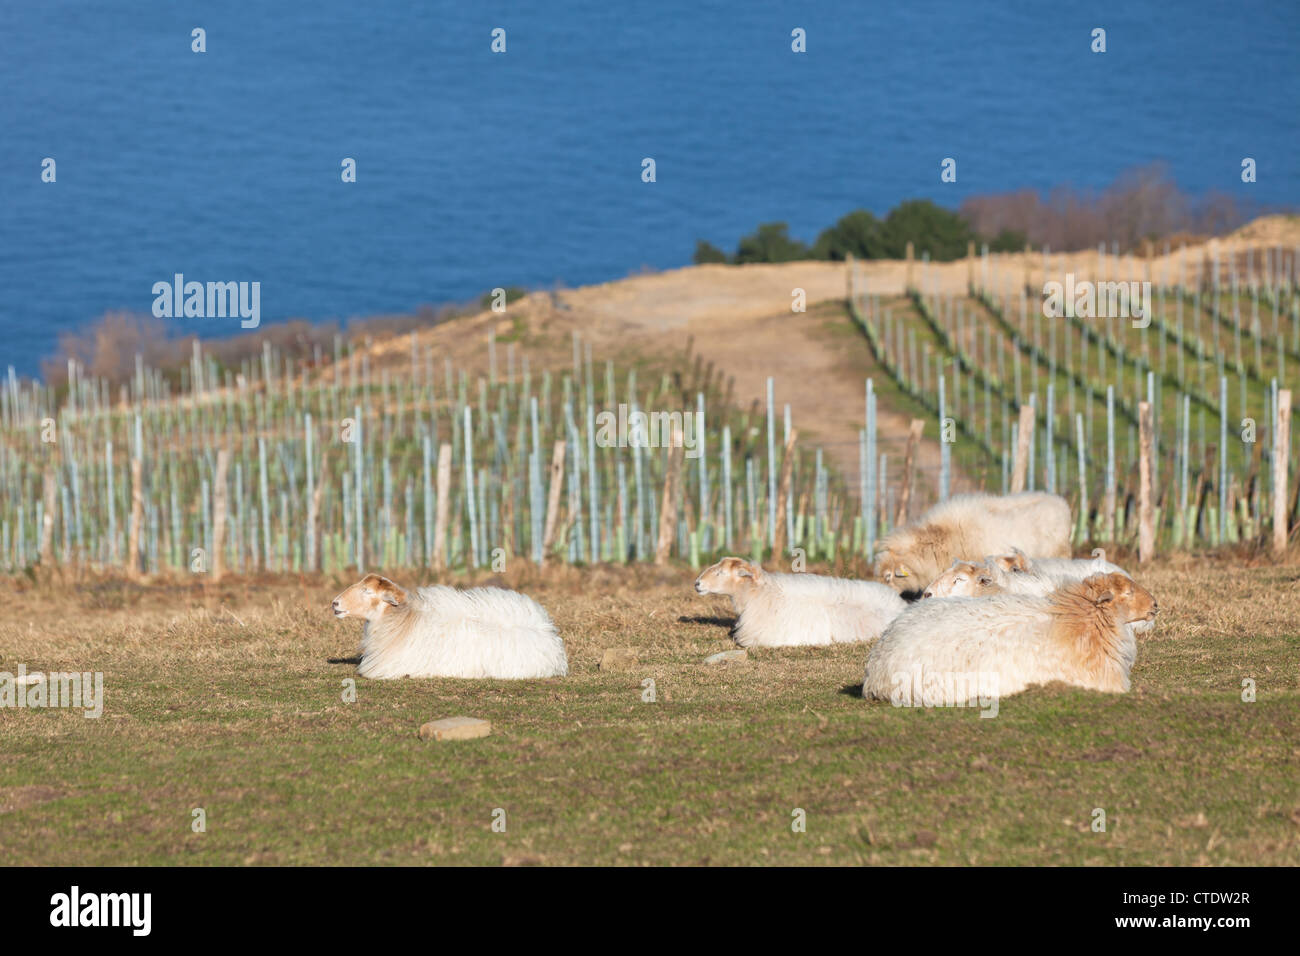 Sleeping sheep on the green hillside against a blue sea Stock Photo